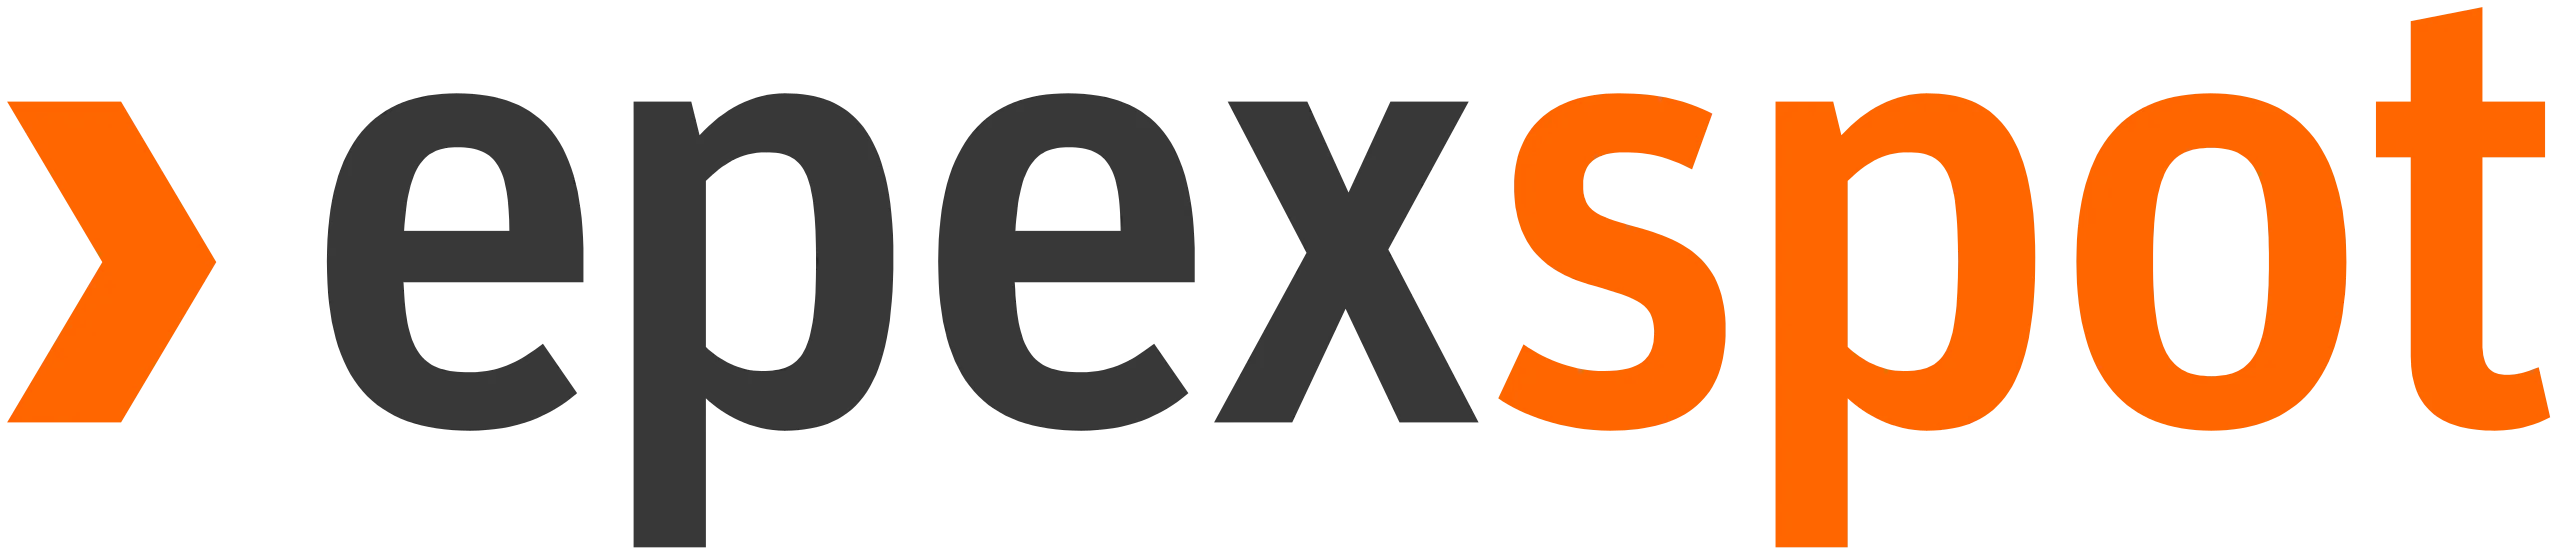 EPEX Spot Exchange logo | Brady Market Connectivity